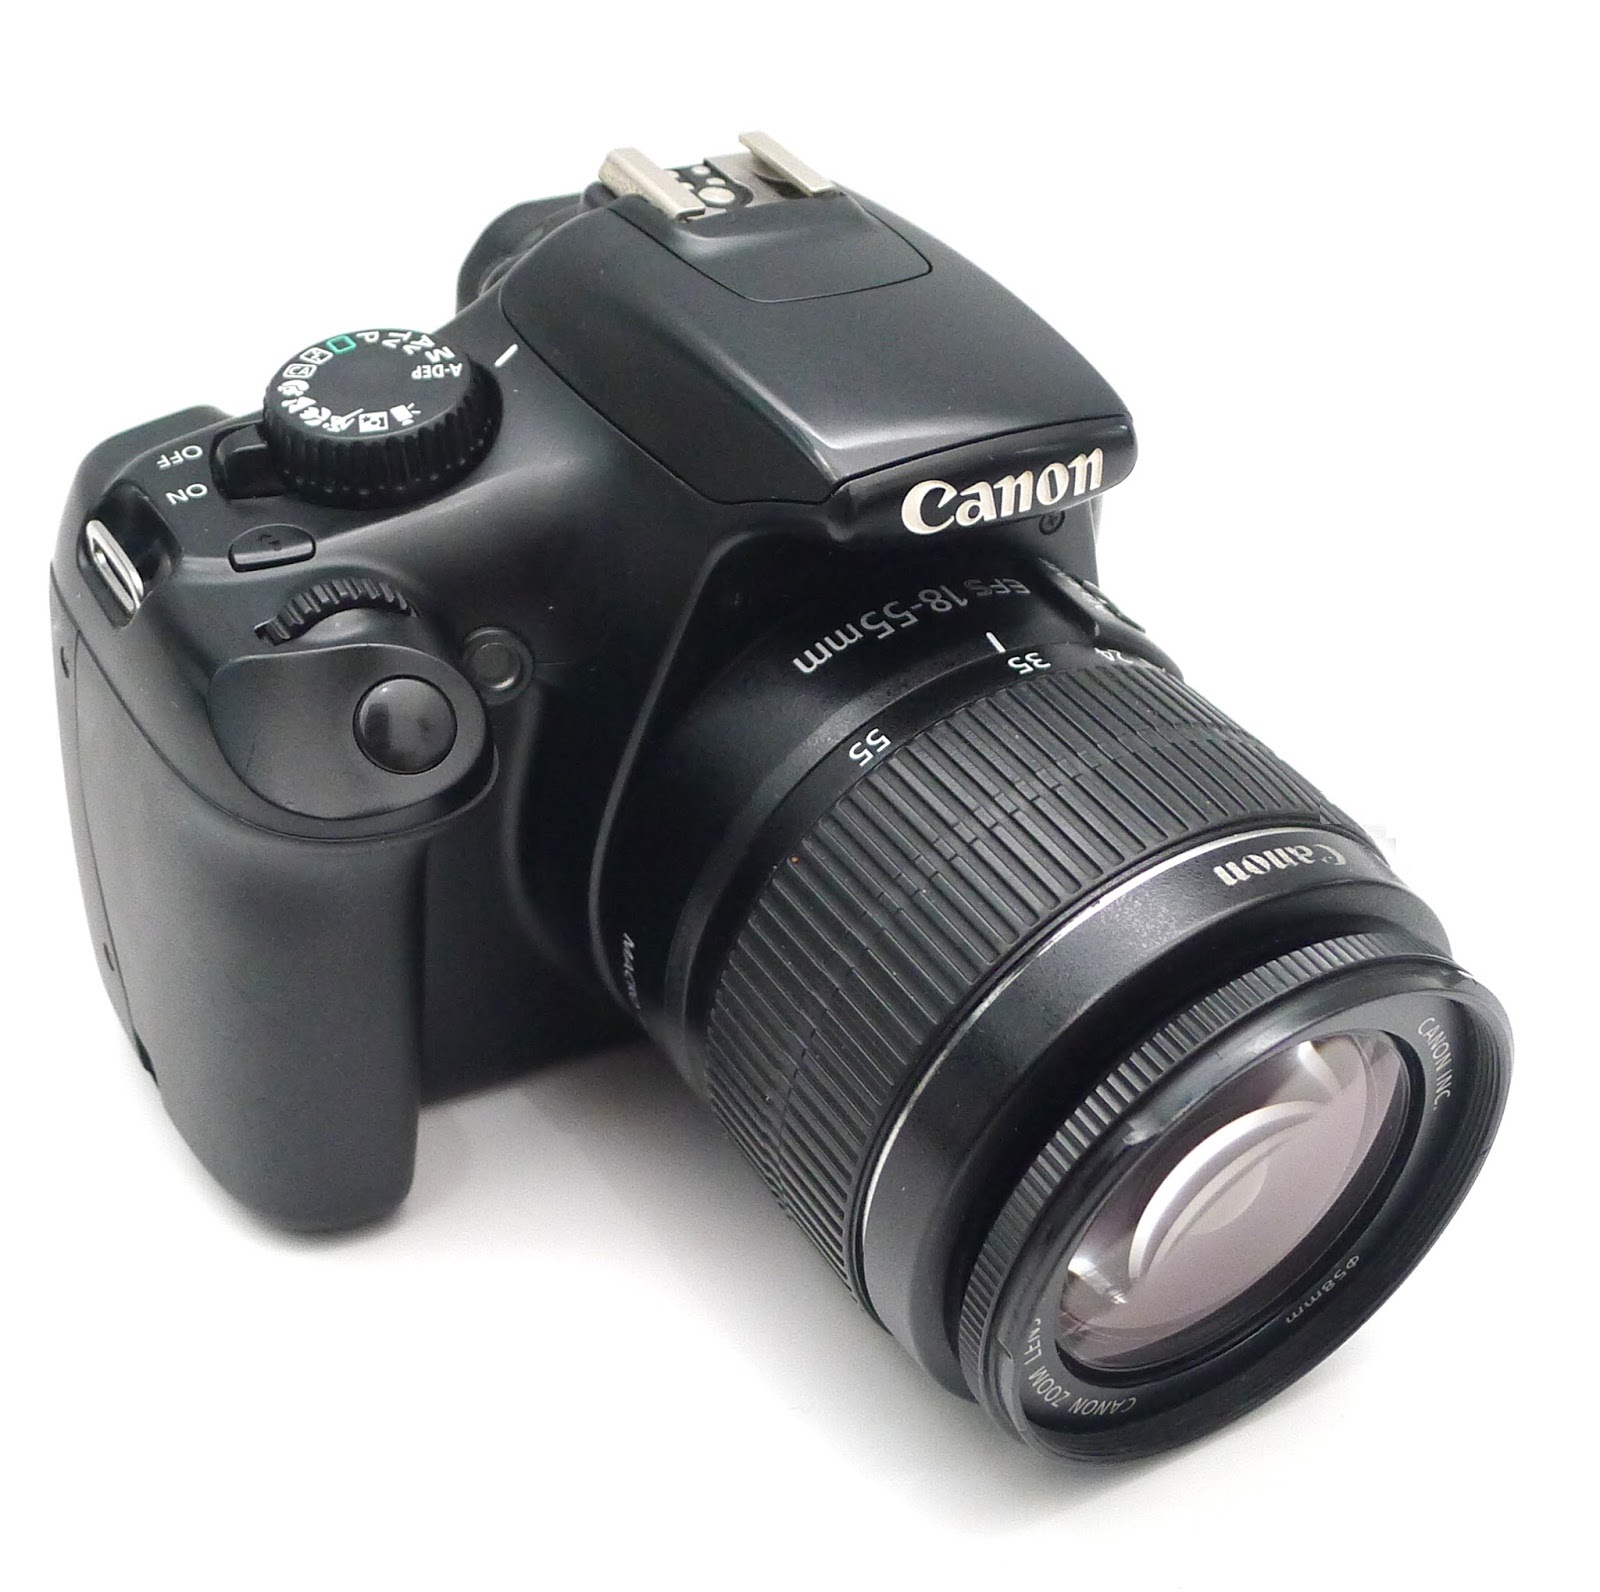  Jual  Kamera  DSLR Canon EOS 1100D Second Jual  Beli  Laptop 